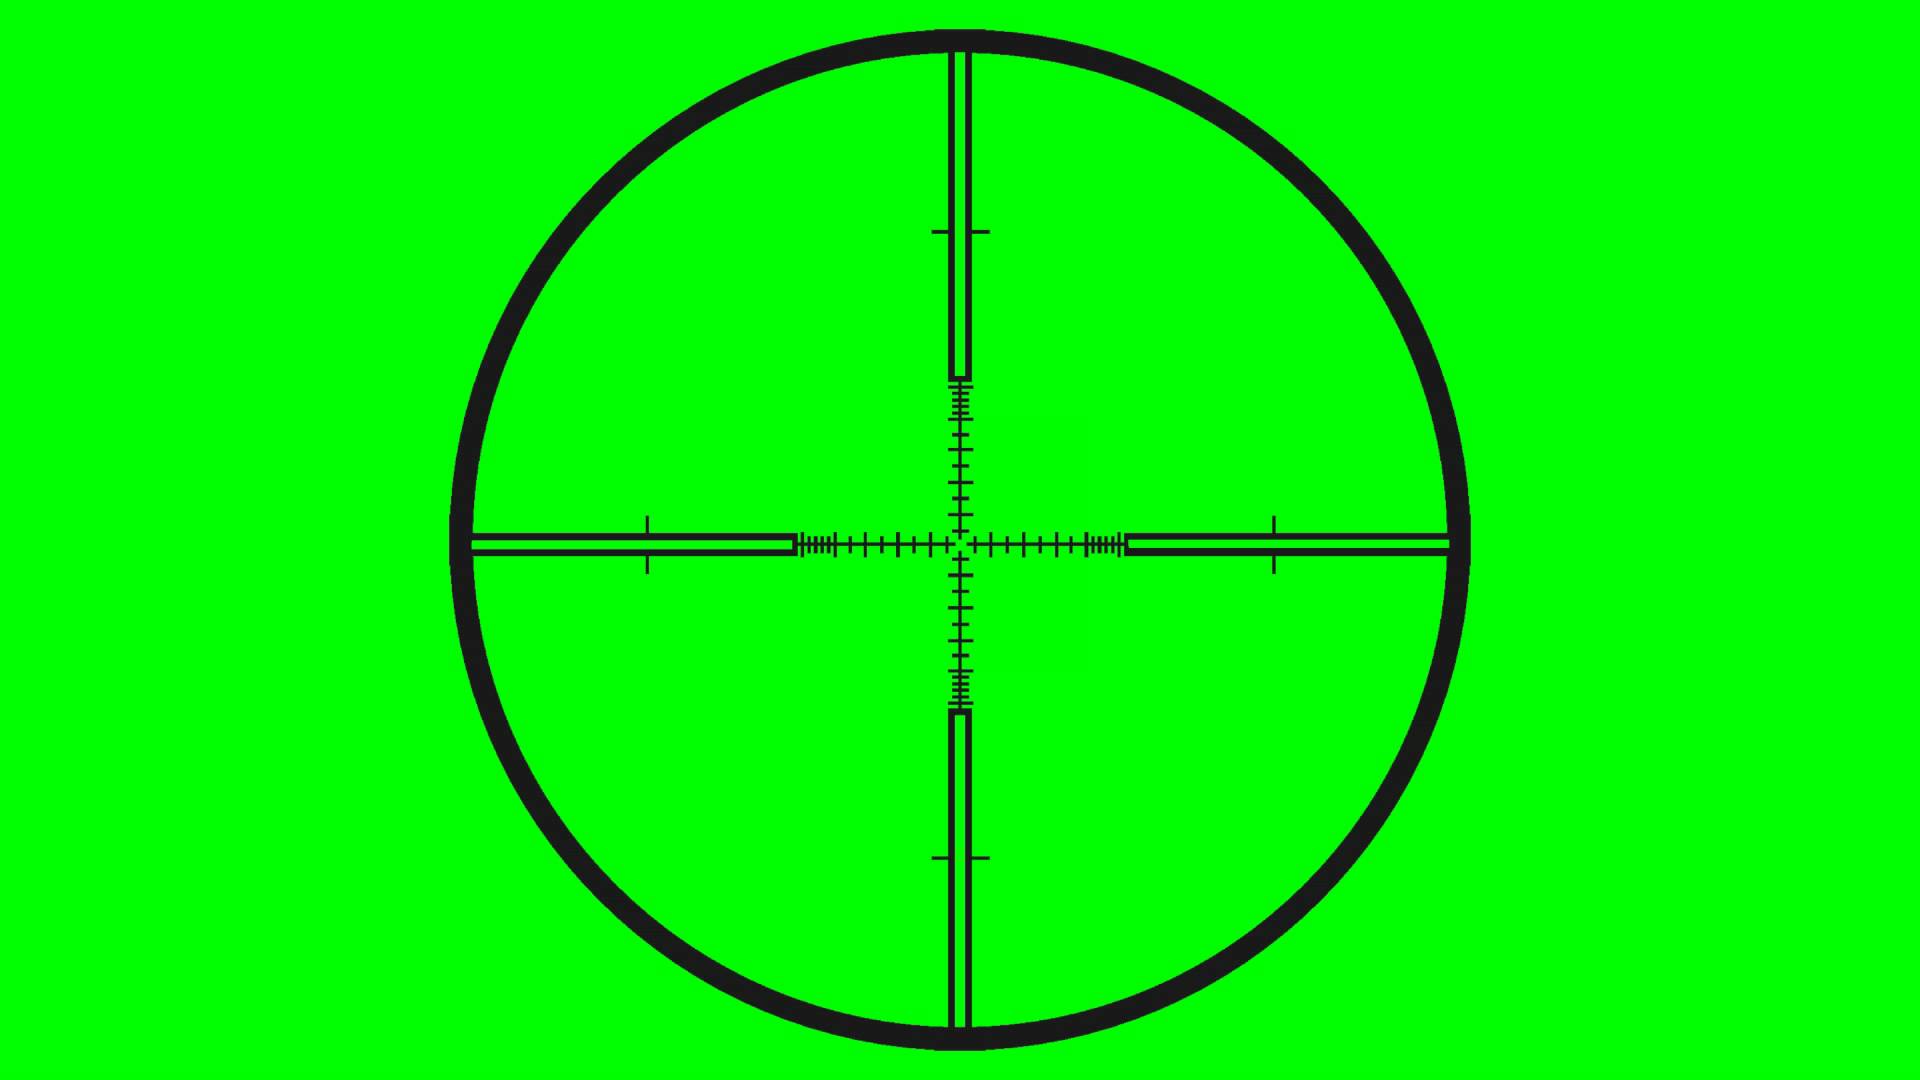 Sniper scope - greenscreen - 